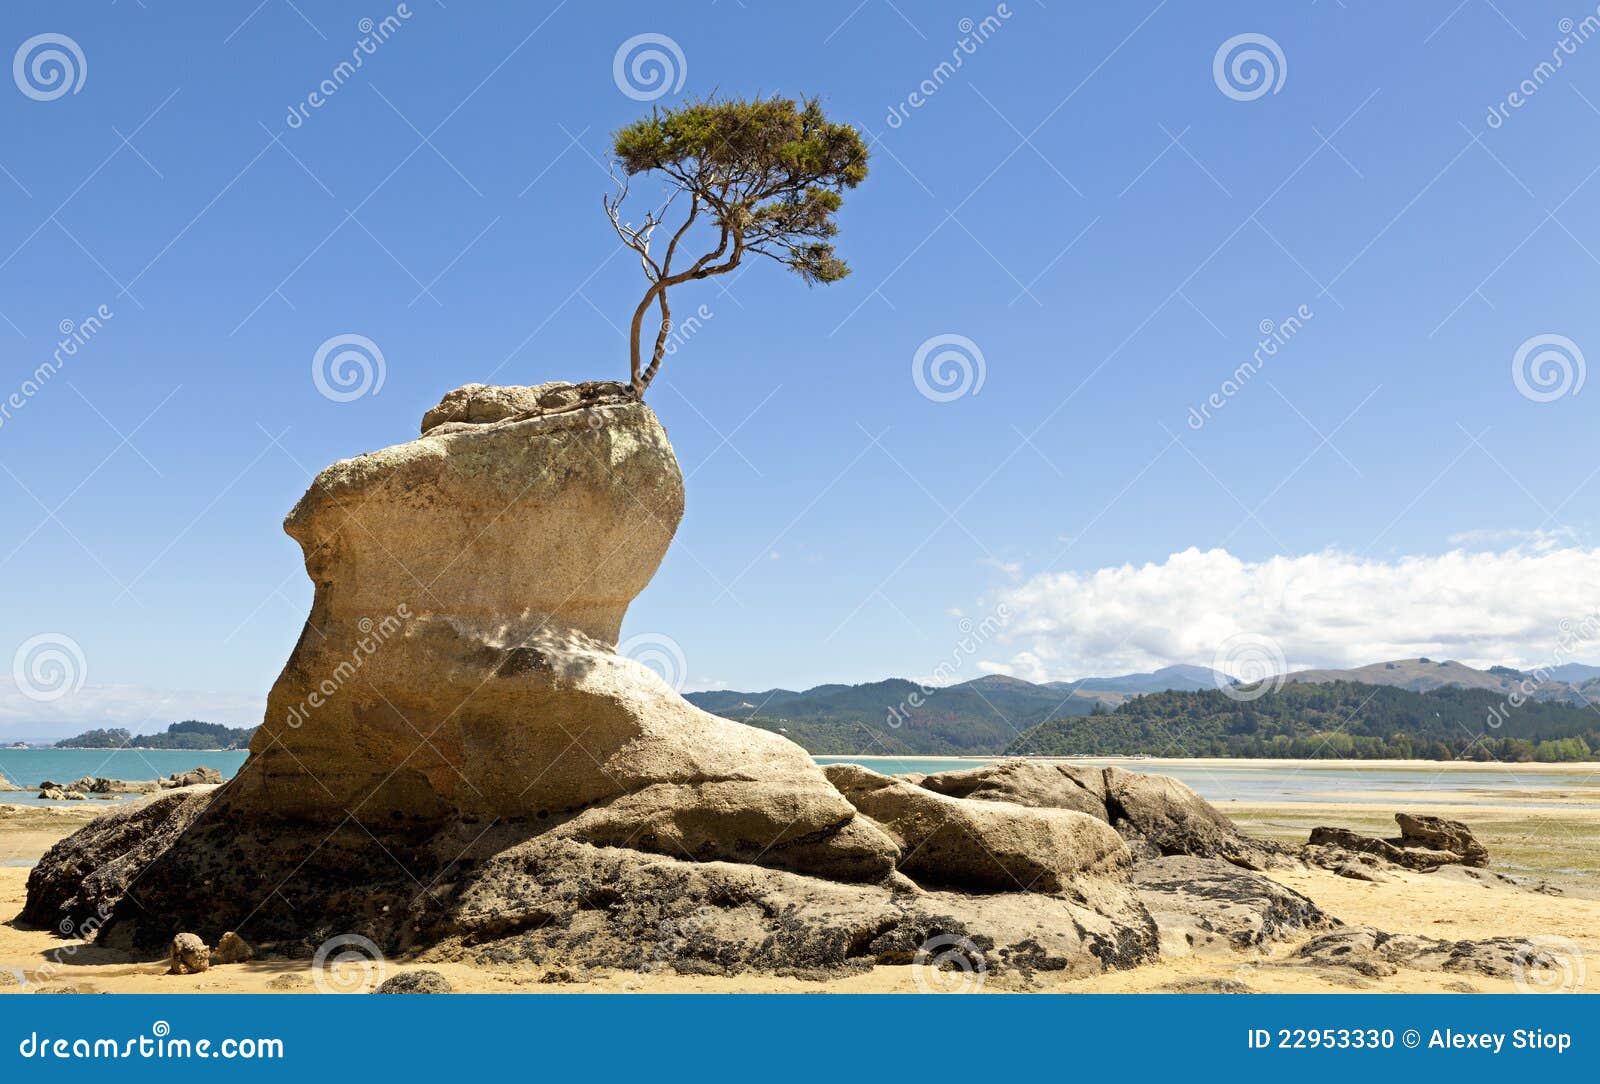 Tree on the rock stock photo. Image of beach, blue, struggle - 22953330